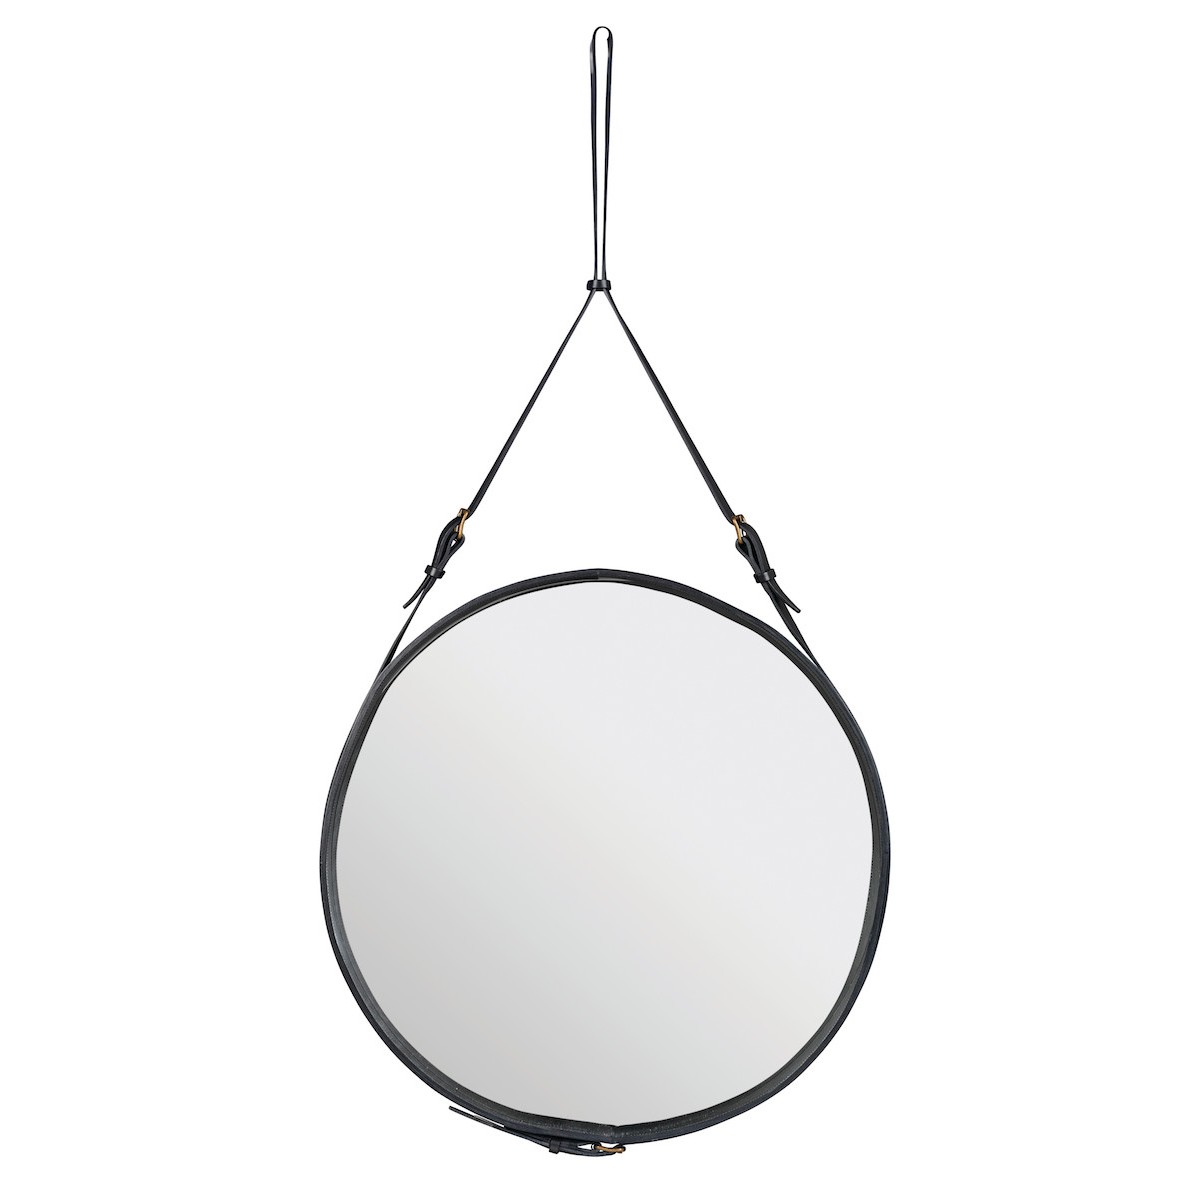 ø70cm - Cuir Noir - miroir circulaire Adnet